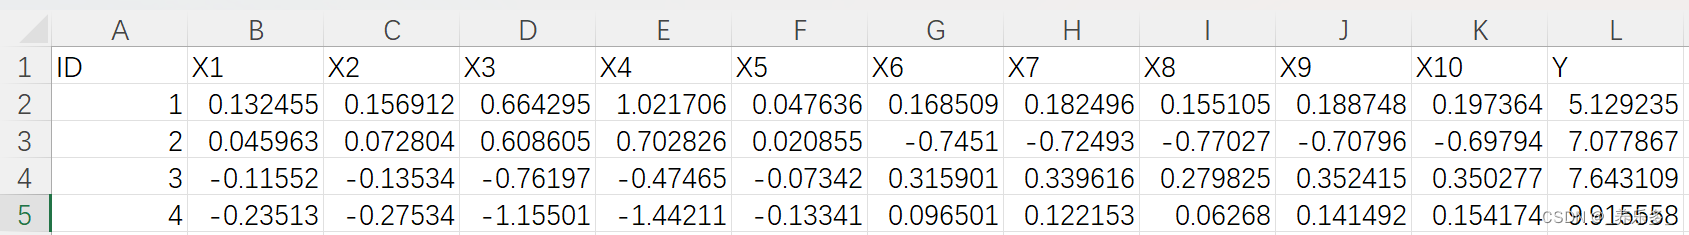 python：从Excel或者CSV中读取因变量与多个自变量，用于训练机器学习回归模型，并输出预测结果